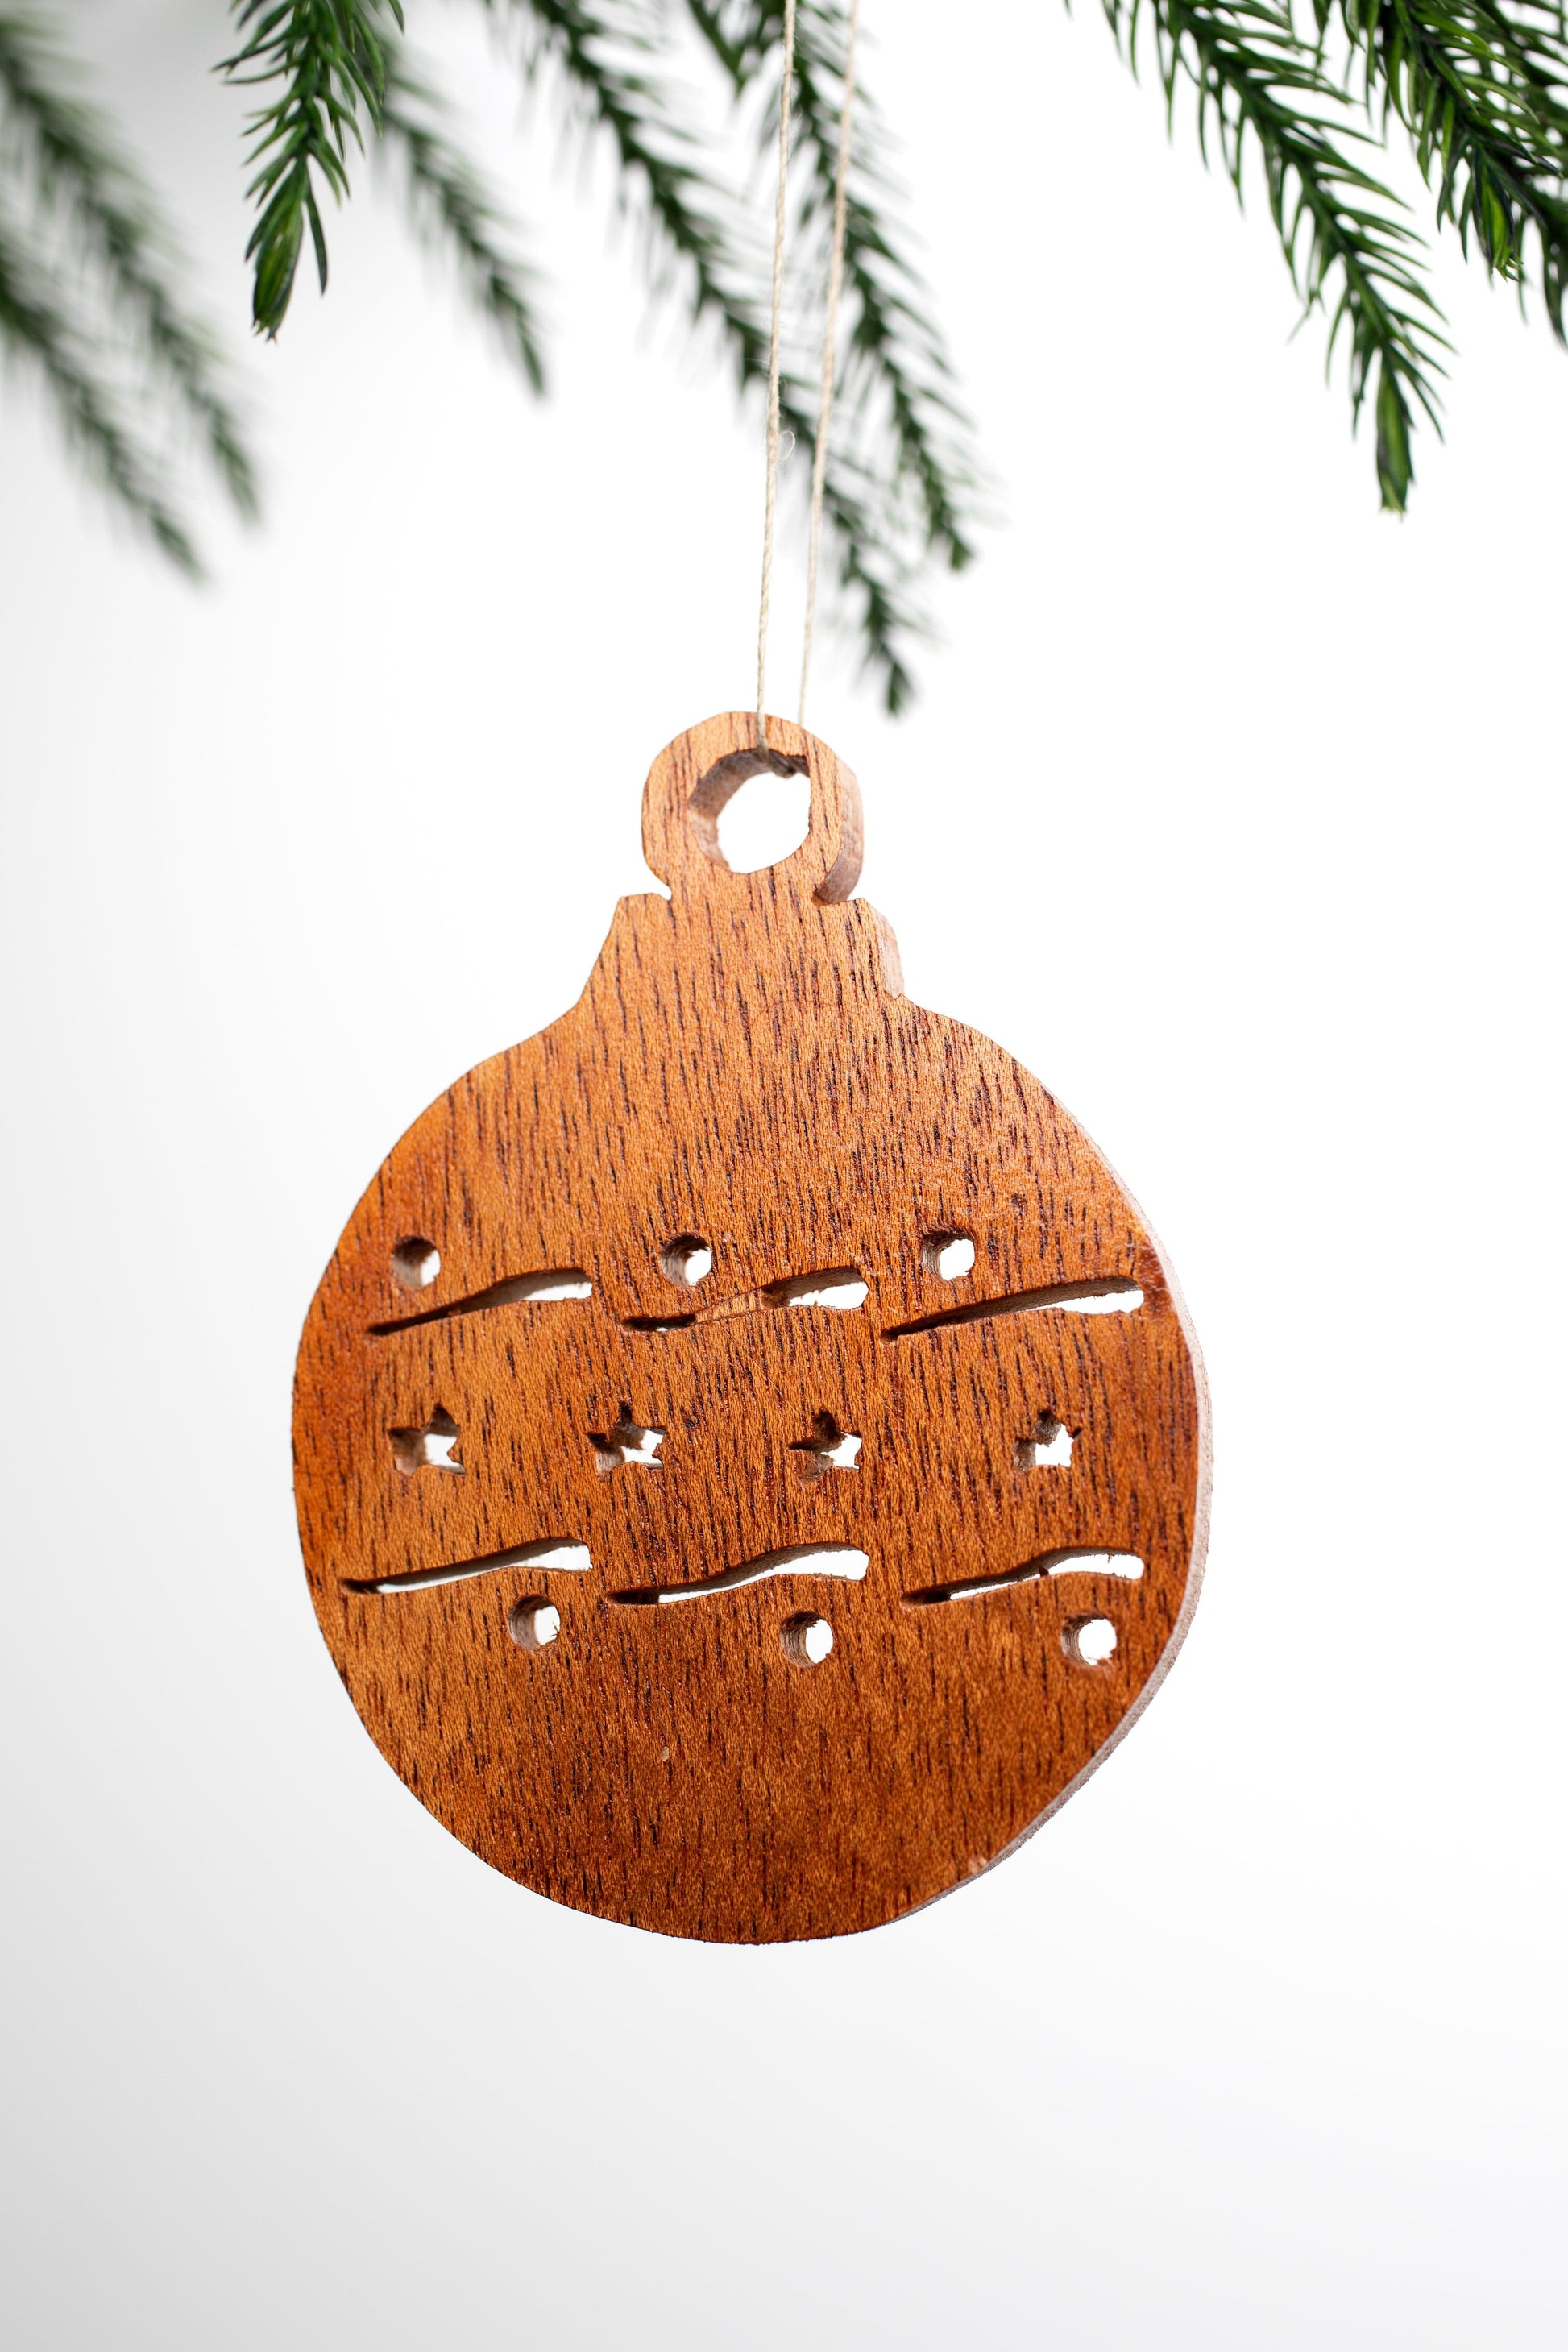 Solid Wood Handmade Holiday Ornaments